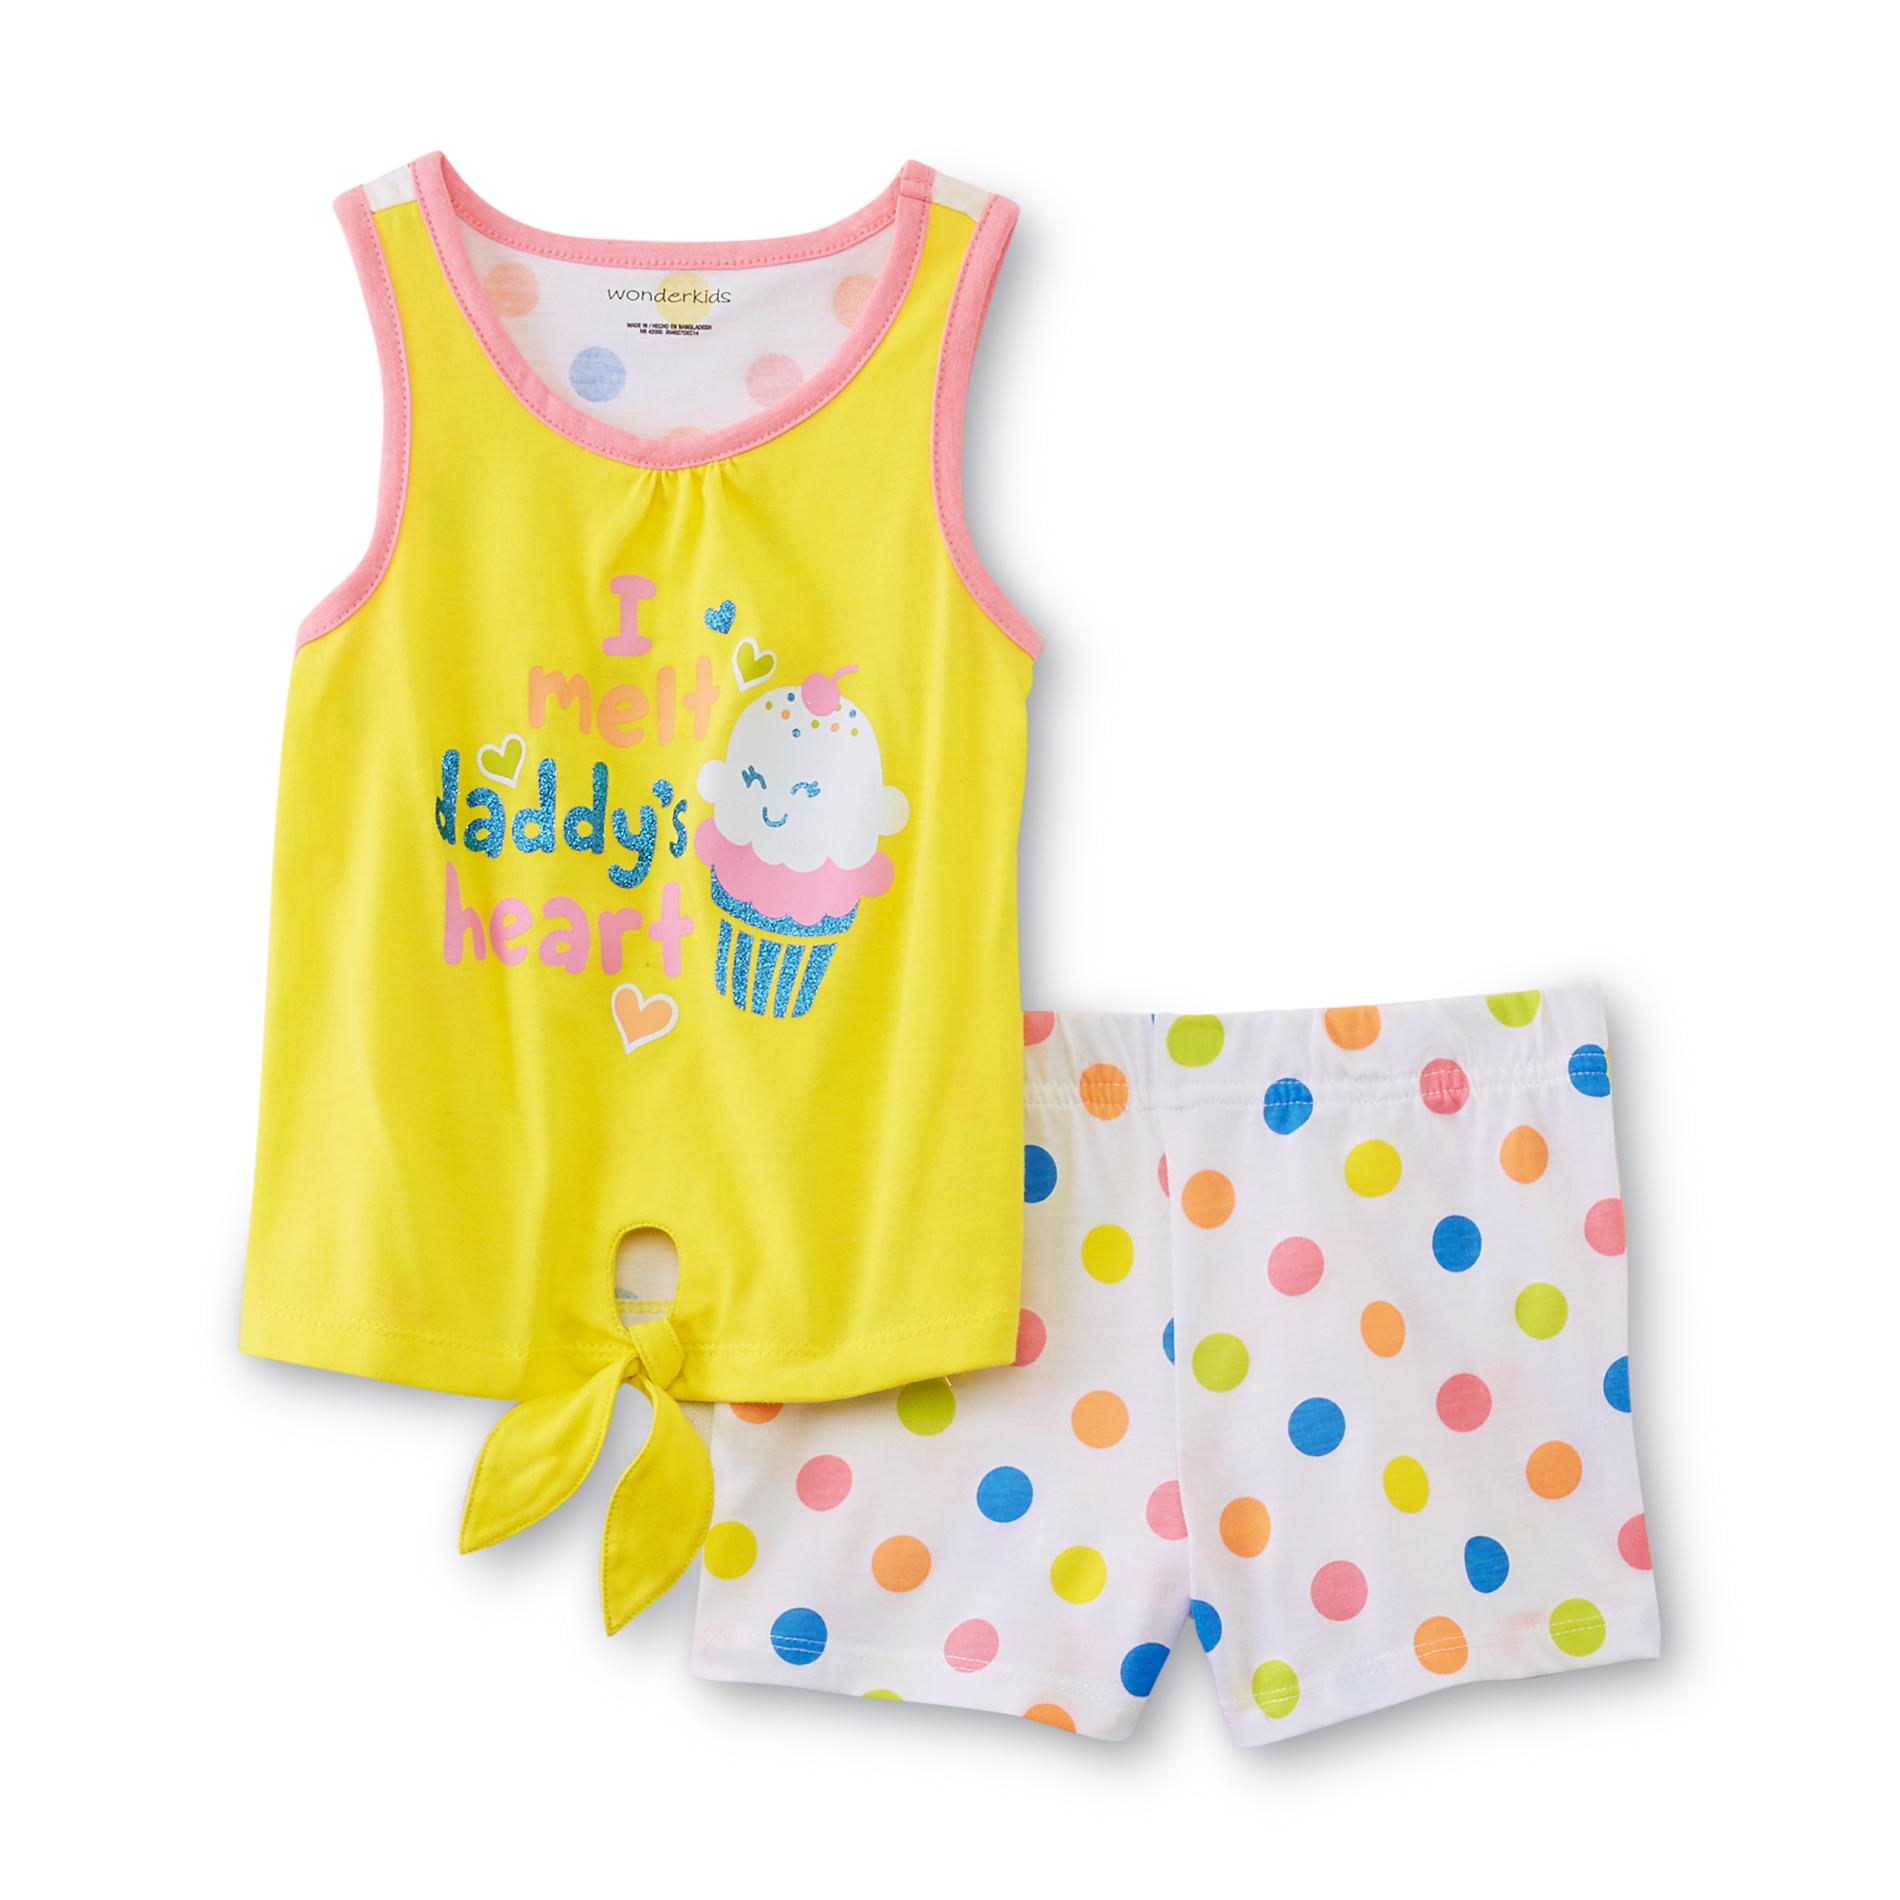 WonderKids Infant & Toddler Girl's Tank Top & Shorts - Daddy's Heart